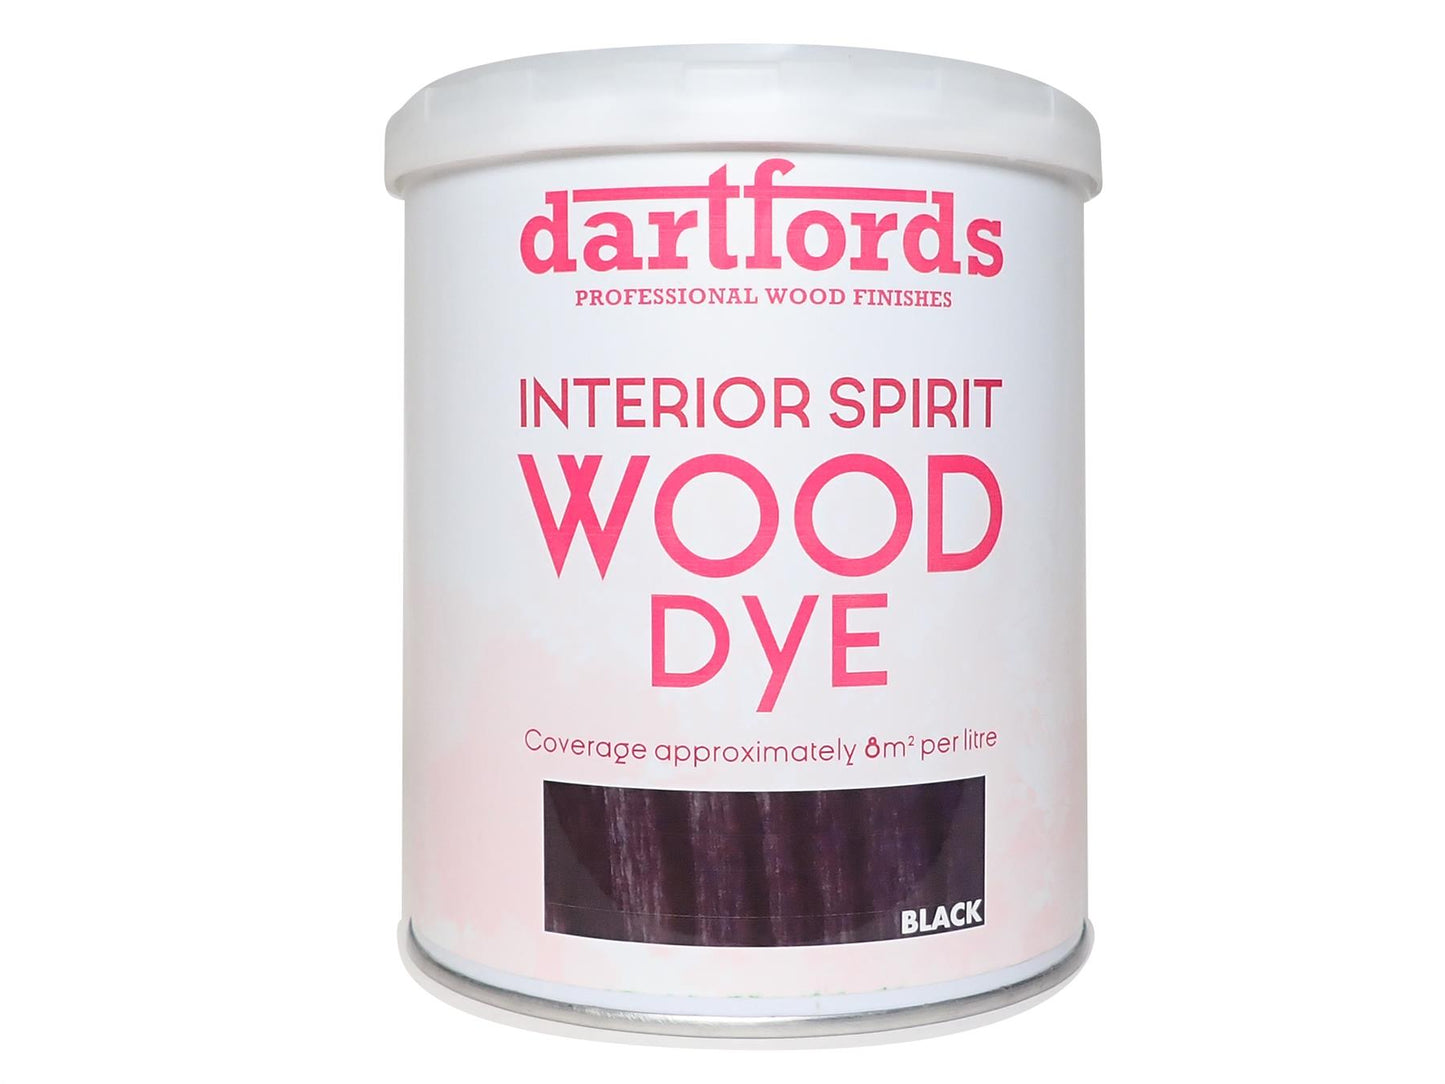 dartfords Black Interior Spirit Based Wood Dye - 1 litre Tin